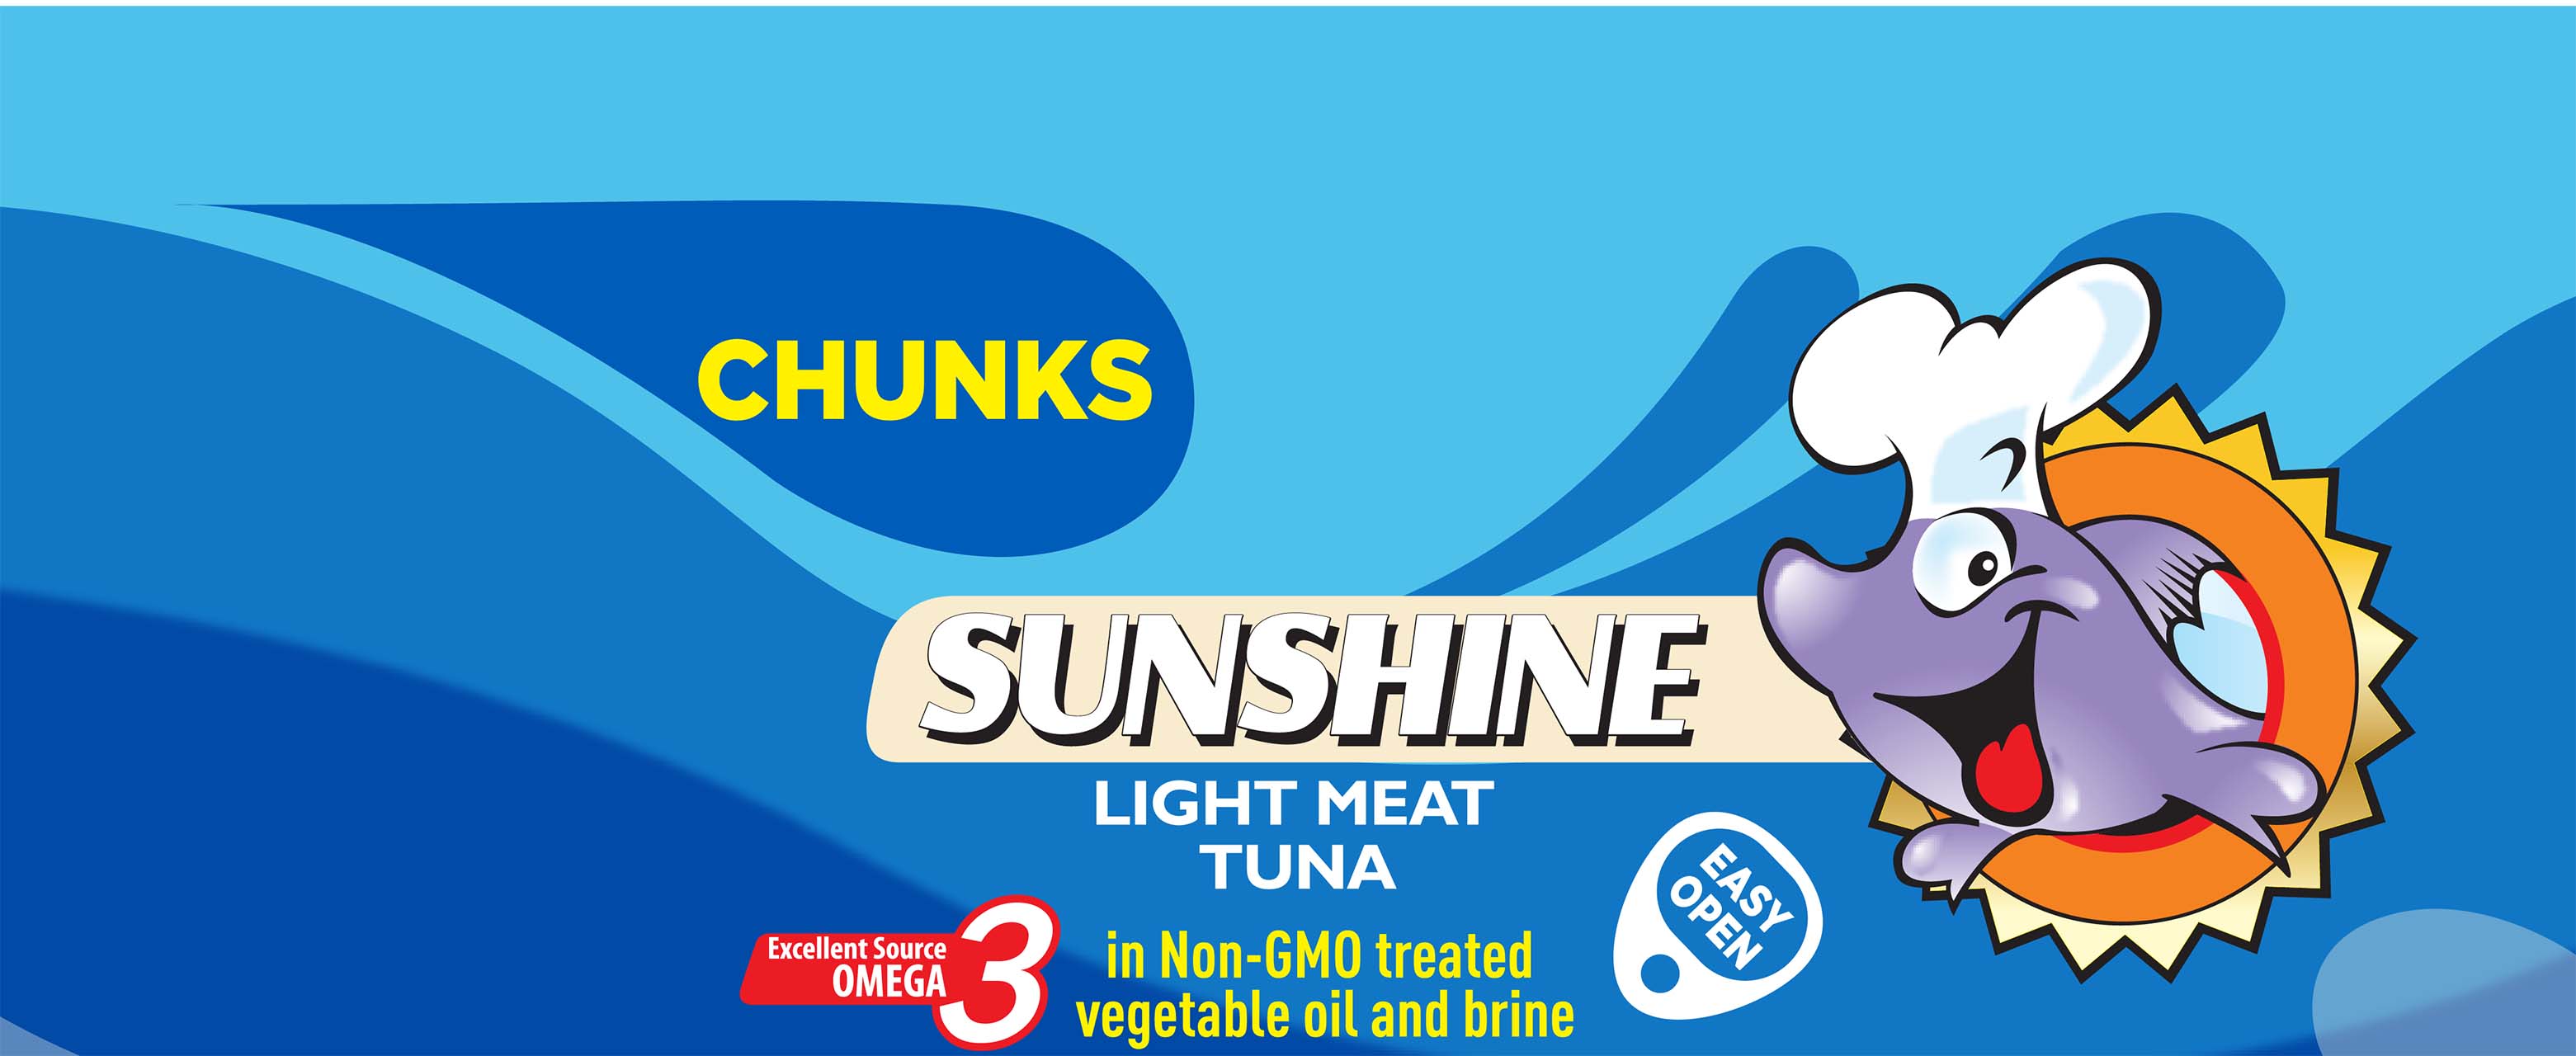 Sunshine Tuna - Package Design & TV Ad